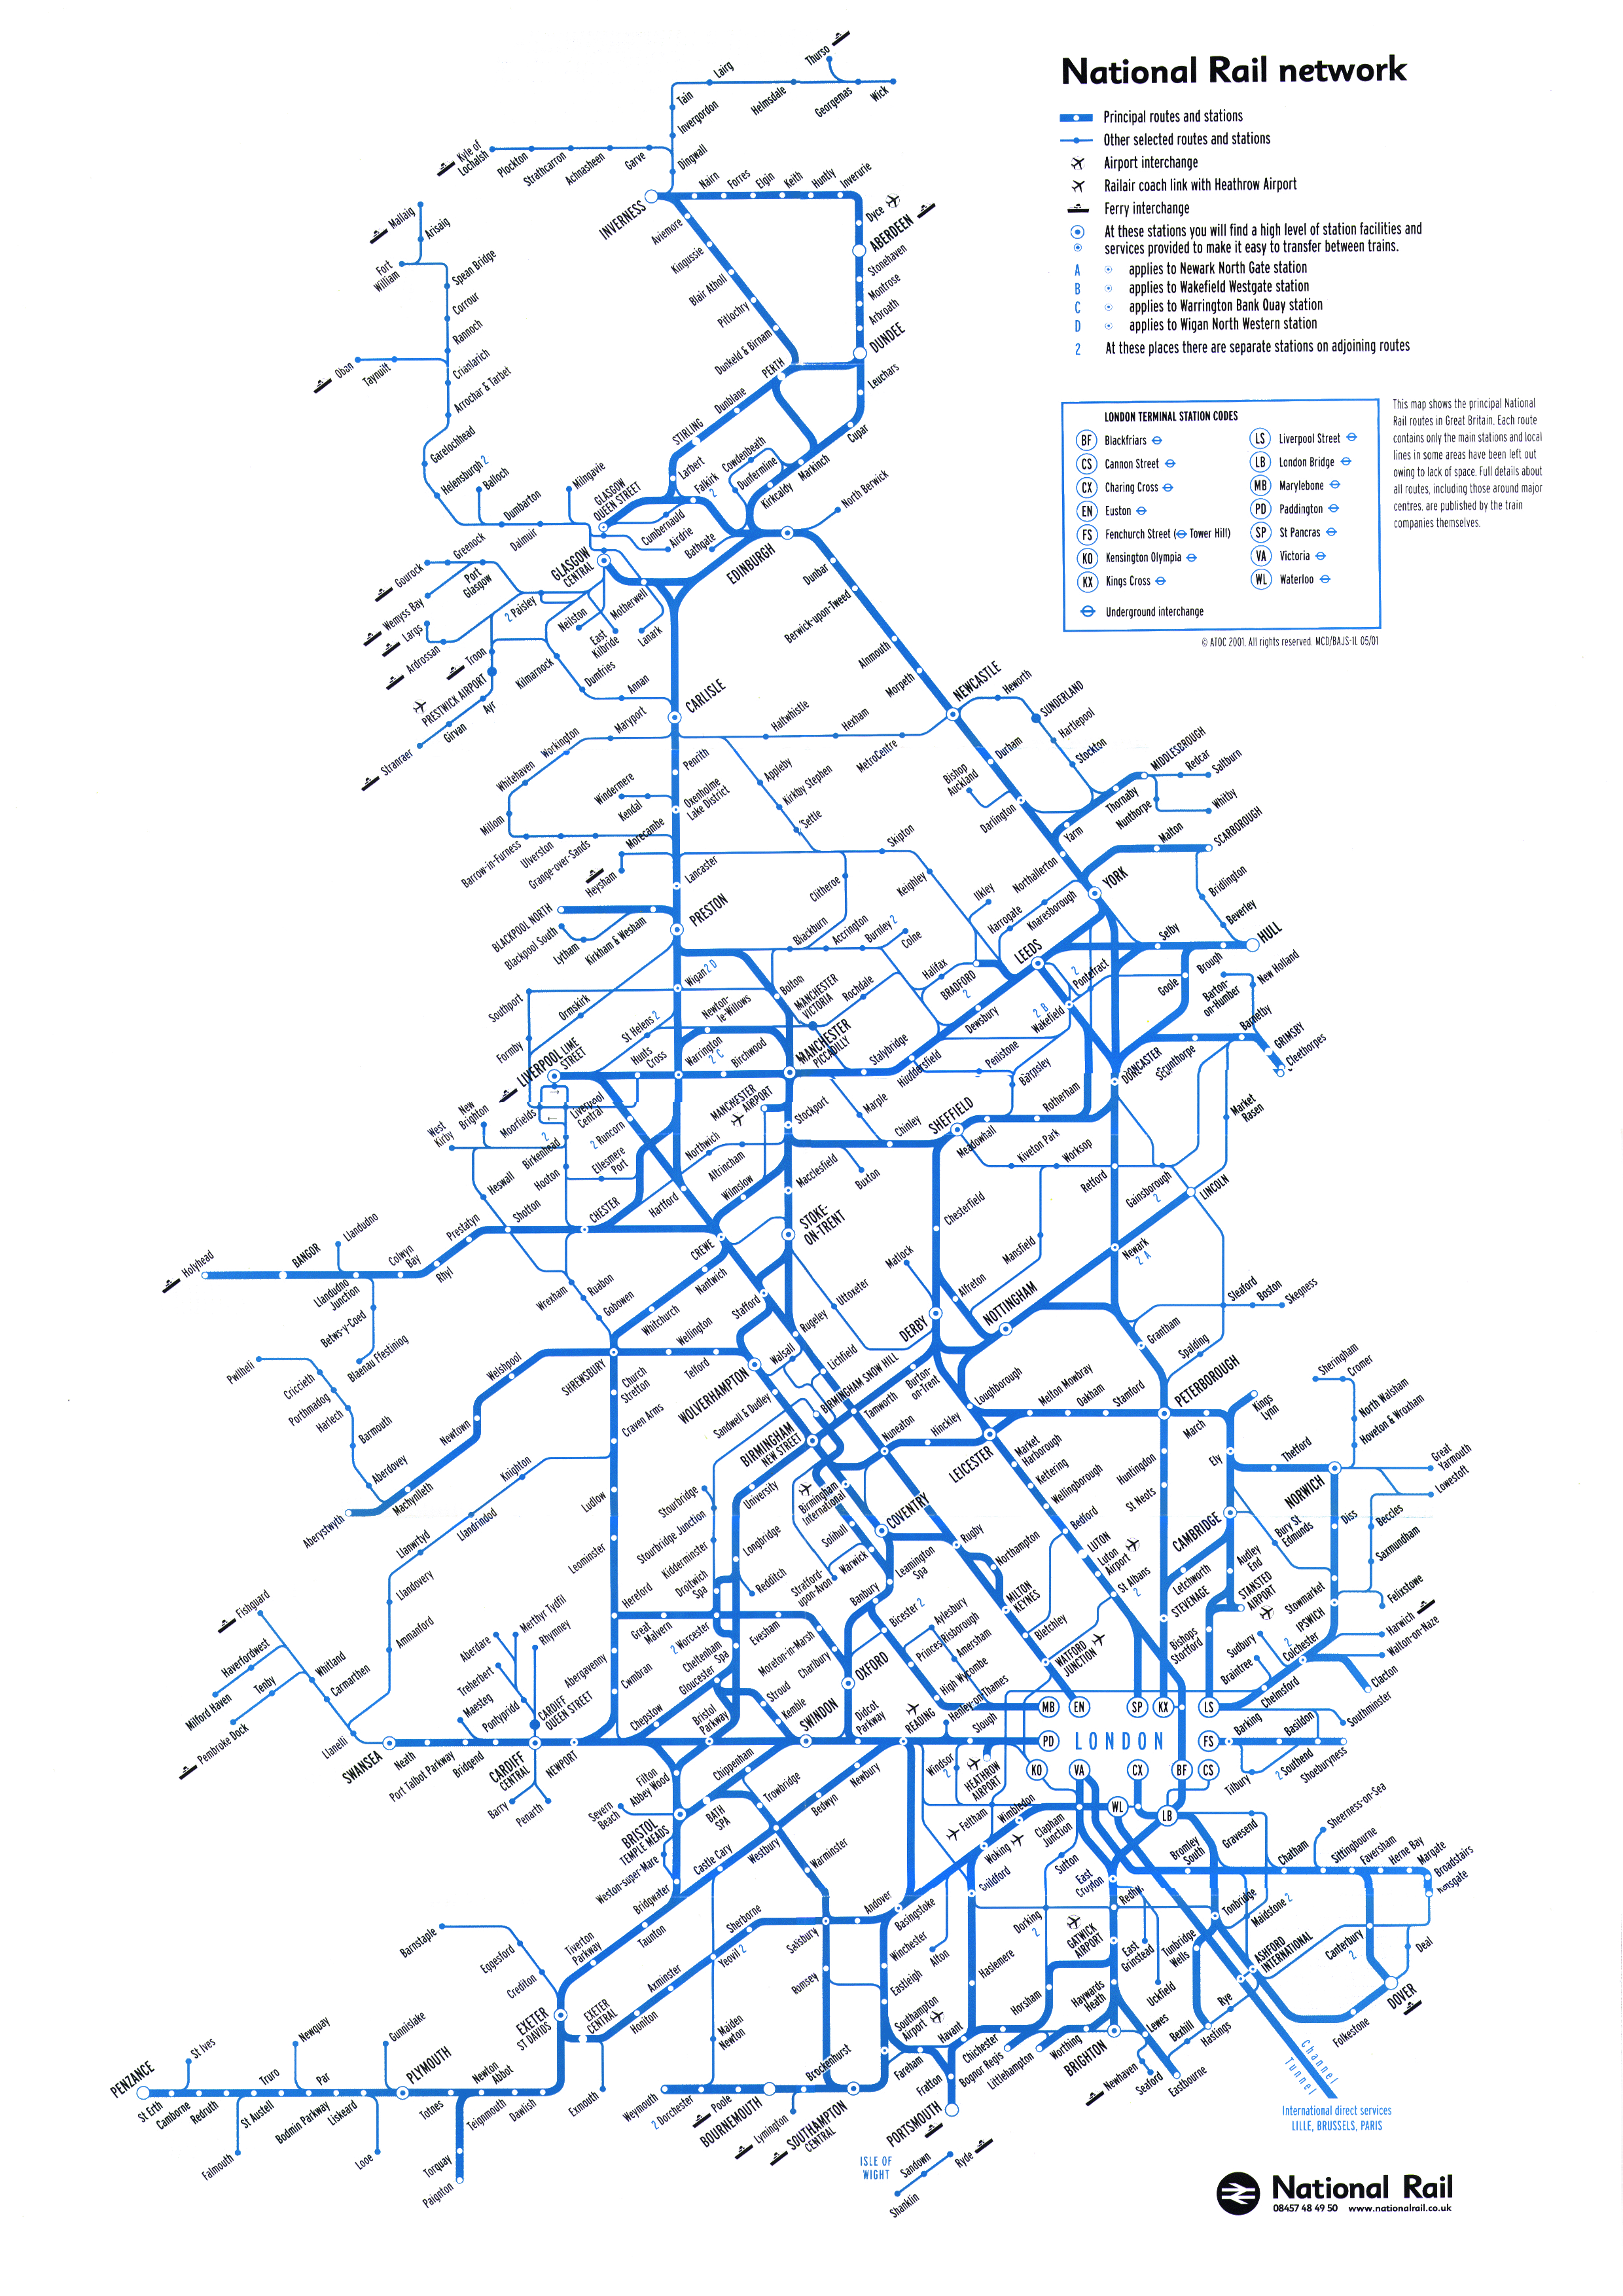 National Rail / ATOC maps